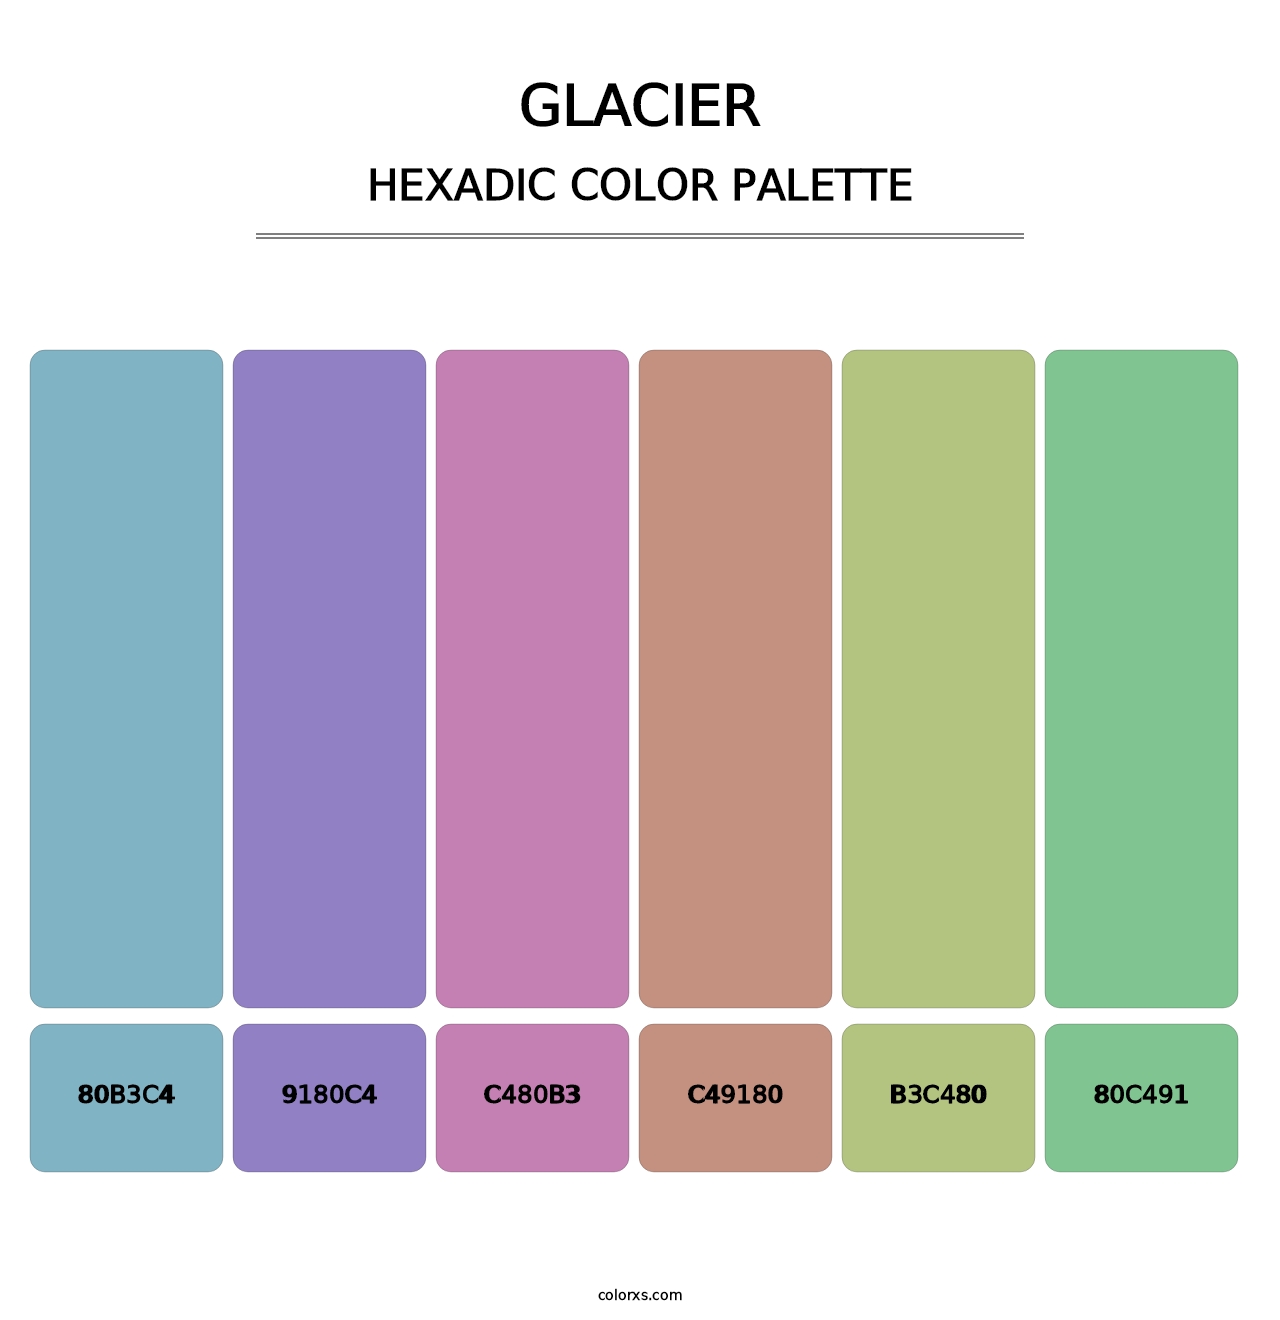 Glacier - Hexadic Color Palette